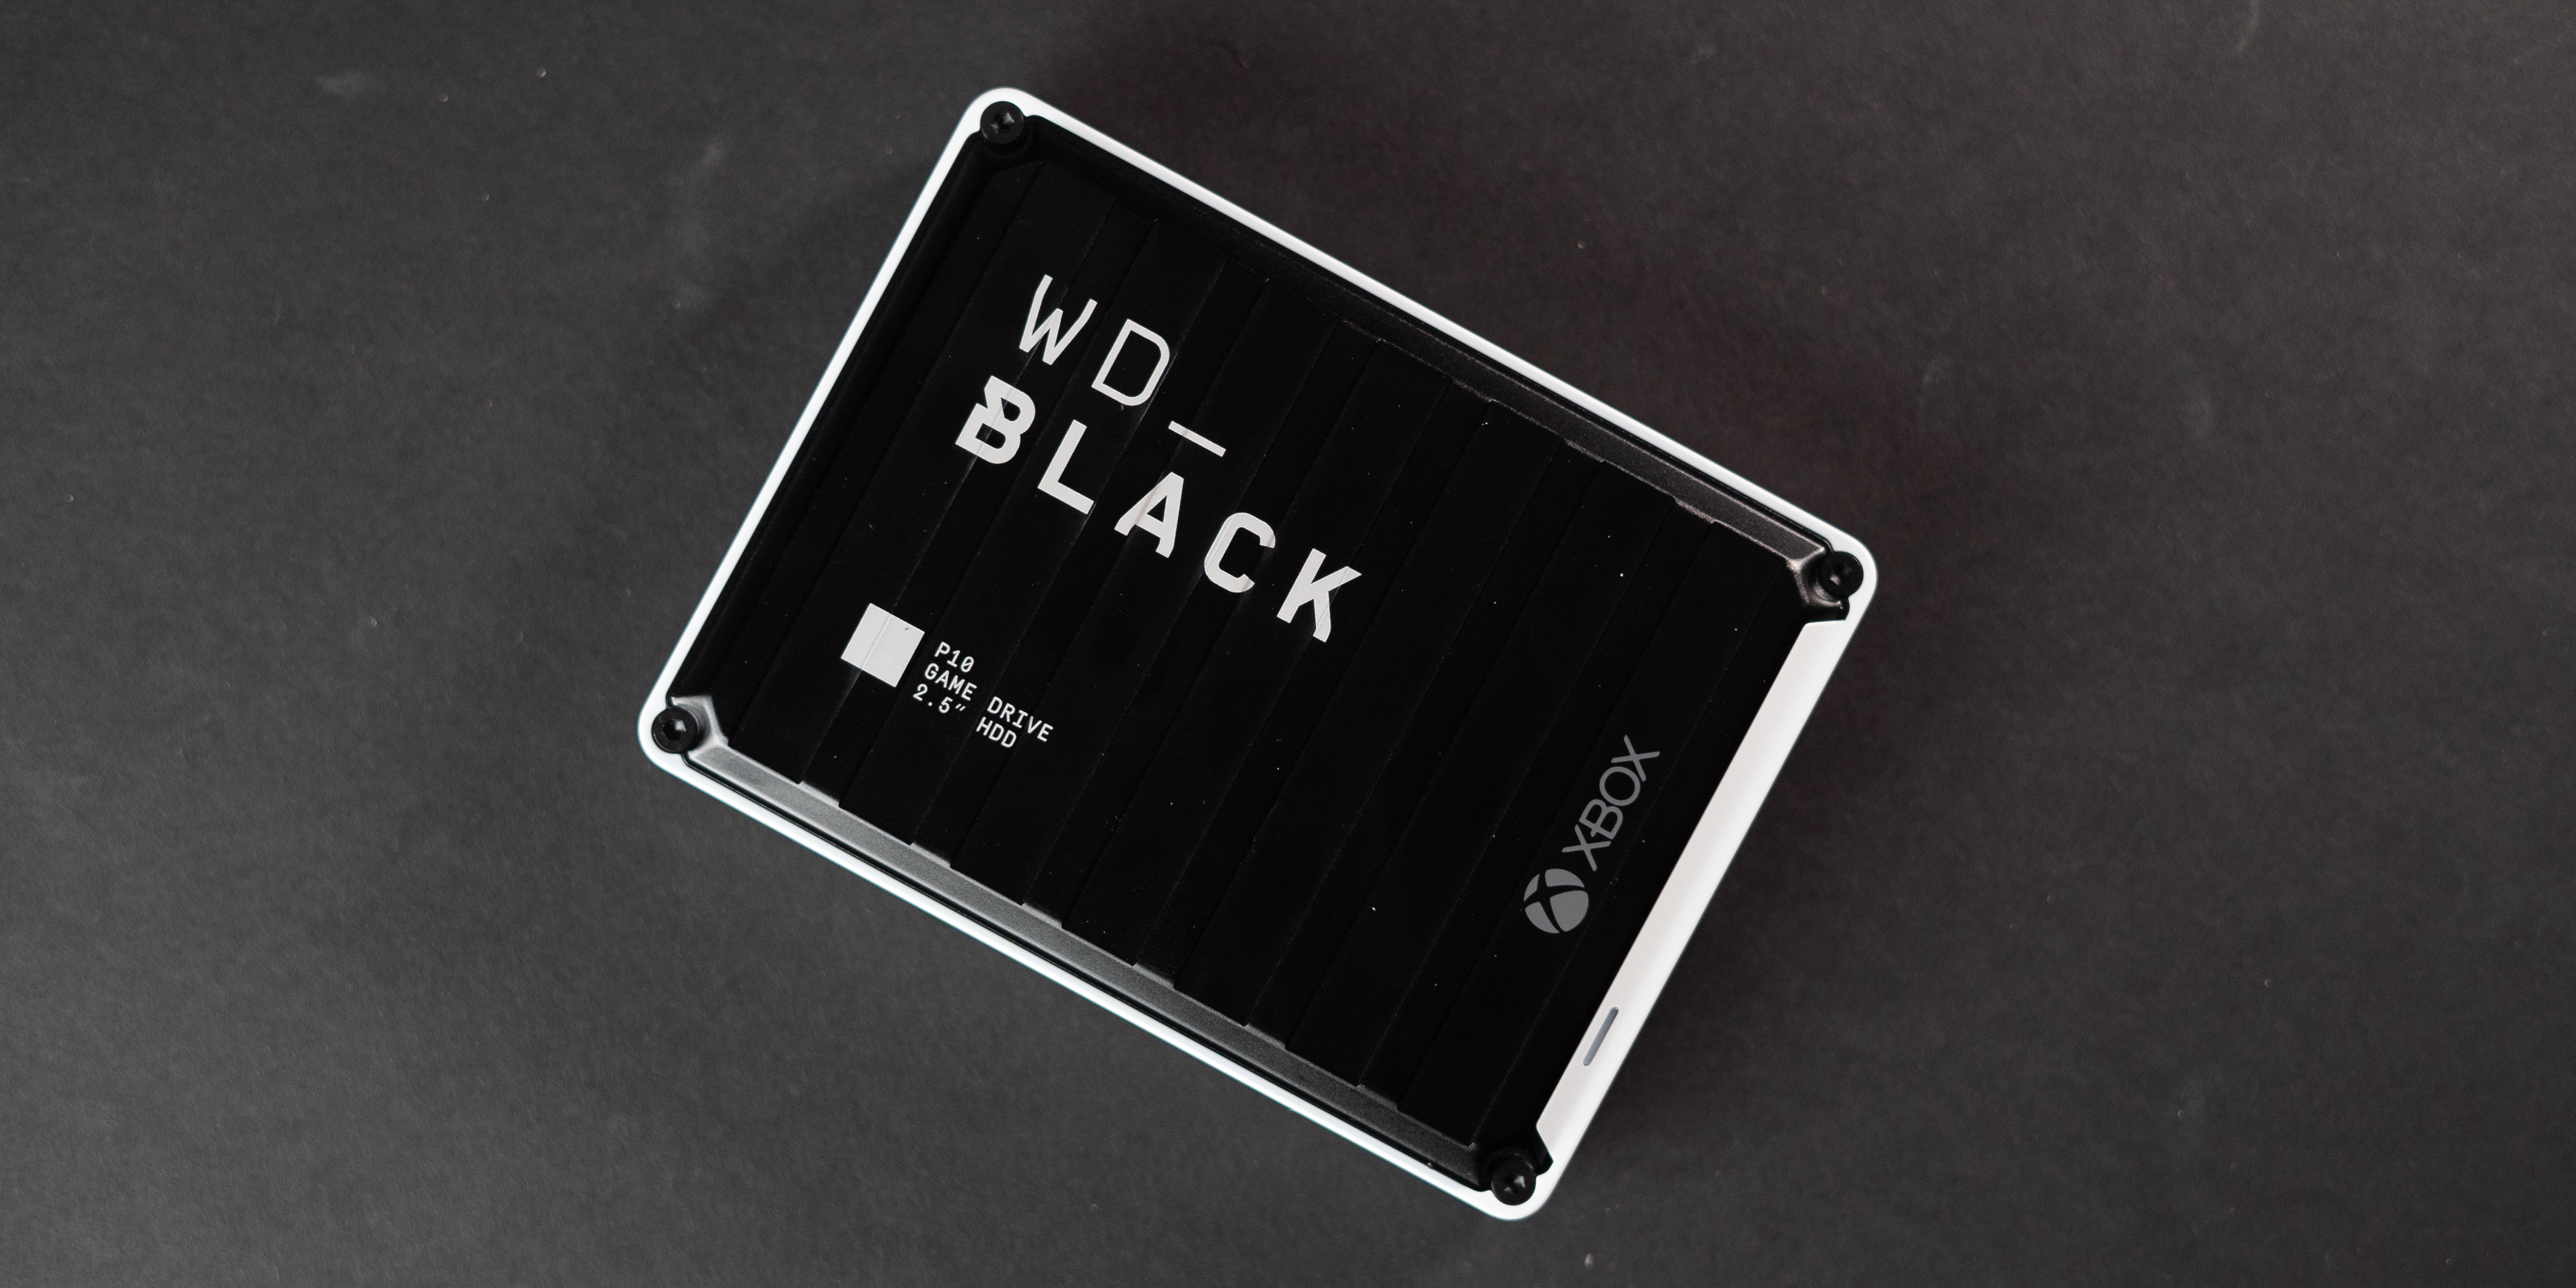 wd black p10 xbox